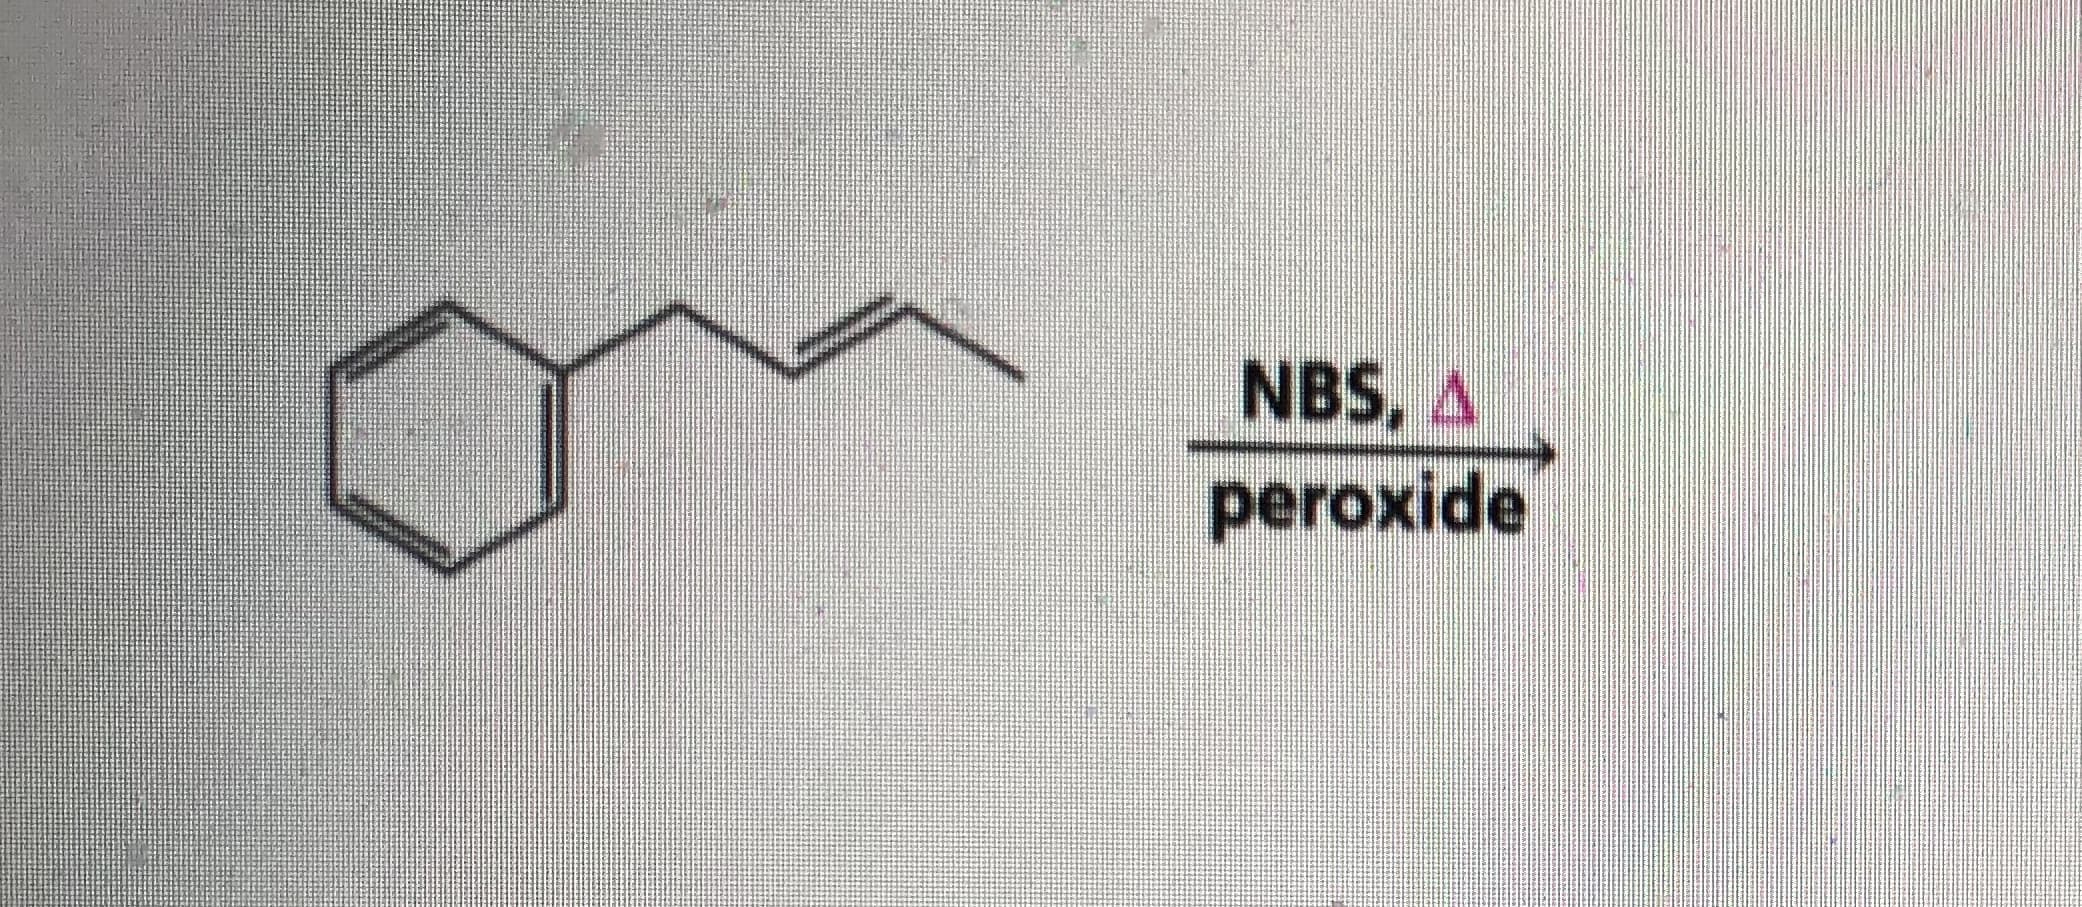 NBS, A
peroxide
